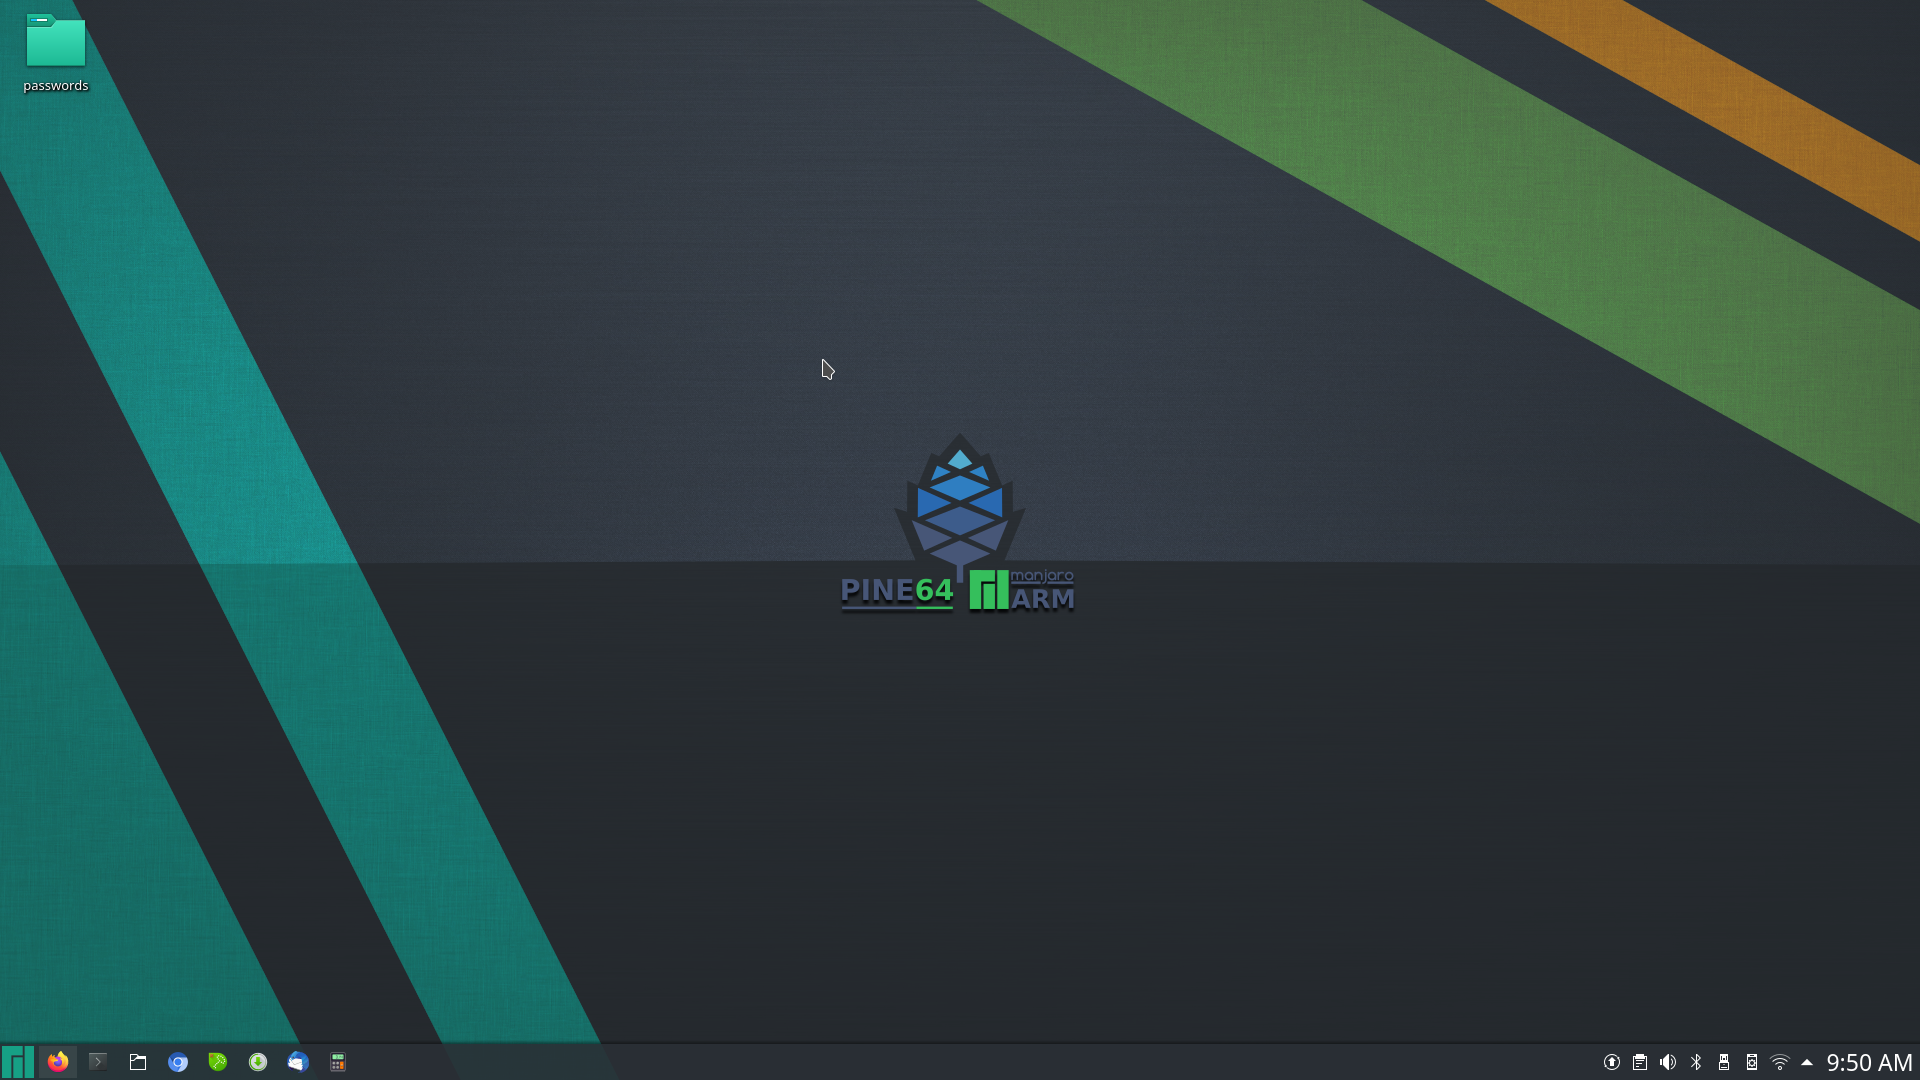 Manjaro KDE desktop